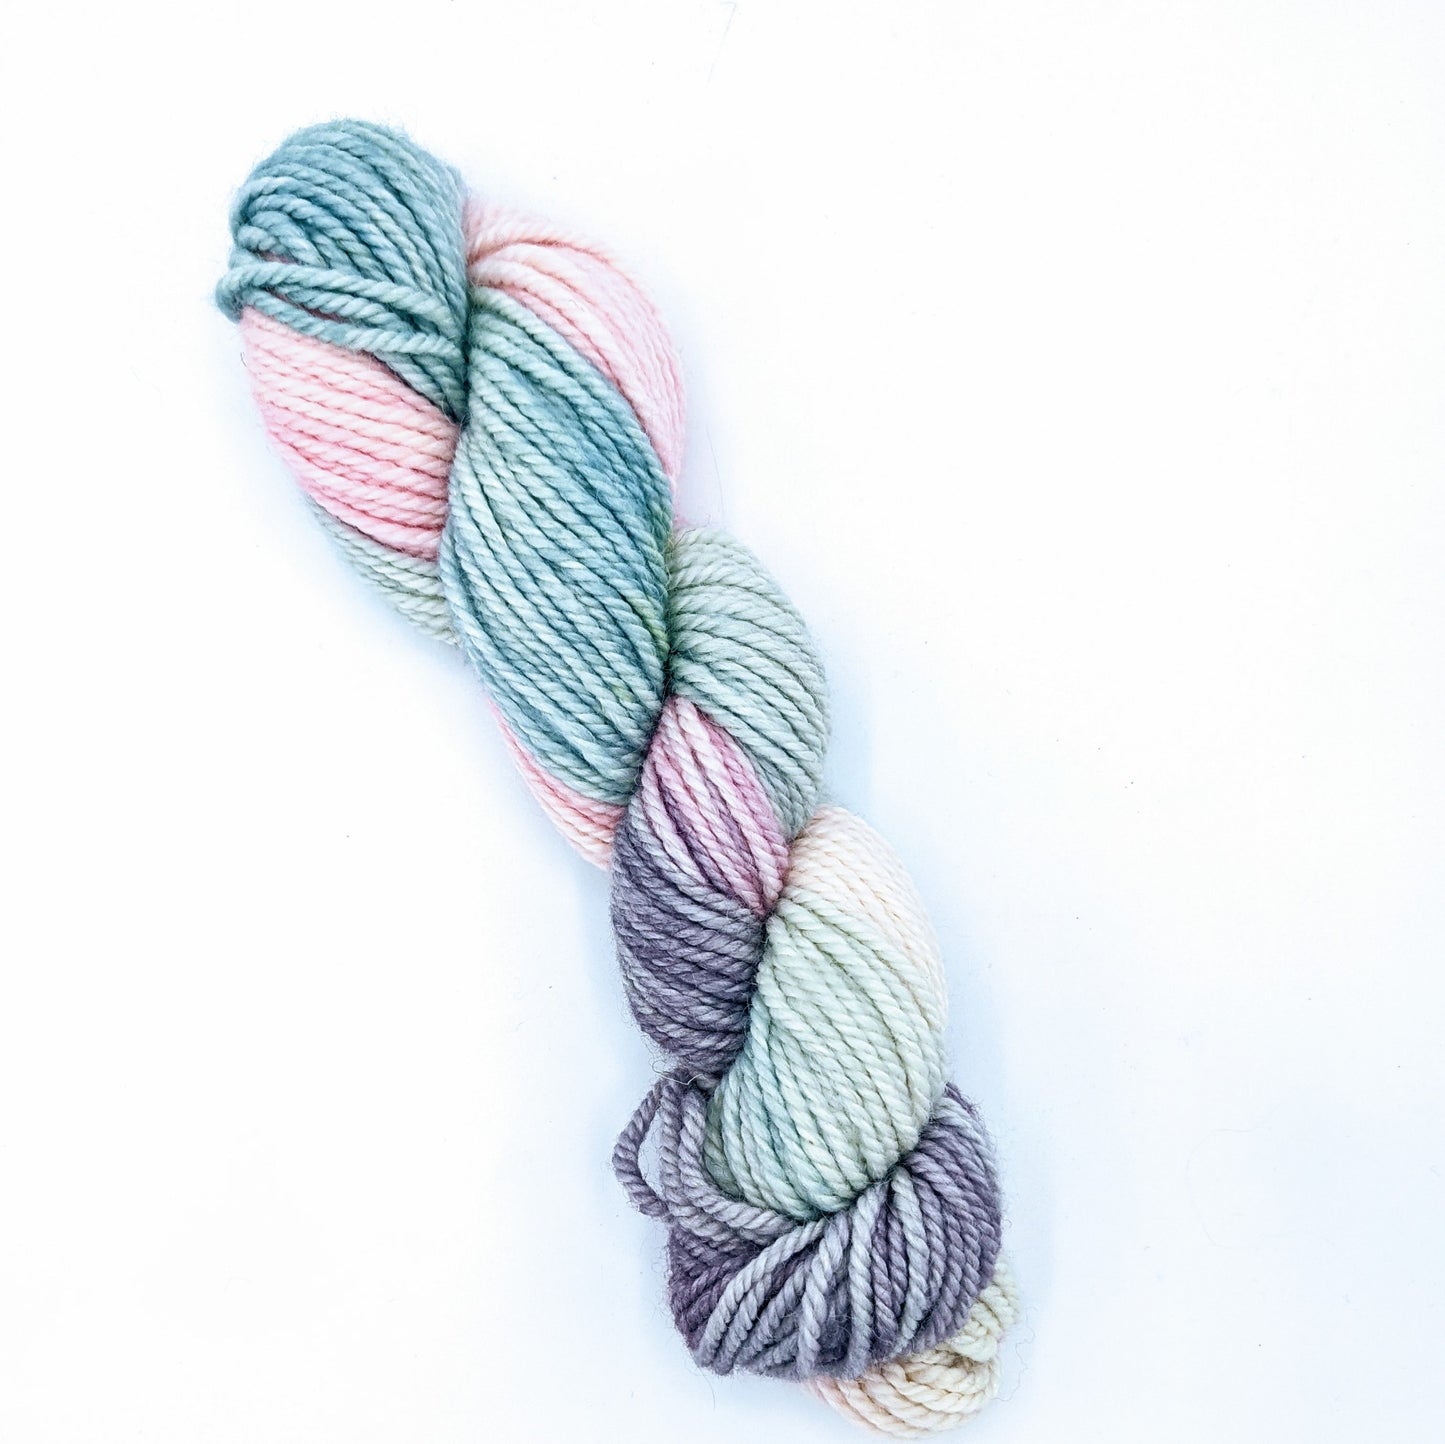 Bulky Knitter's Yarn - Dyed